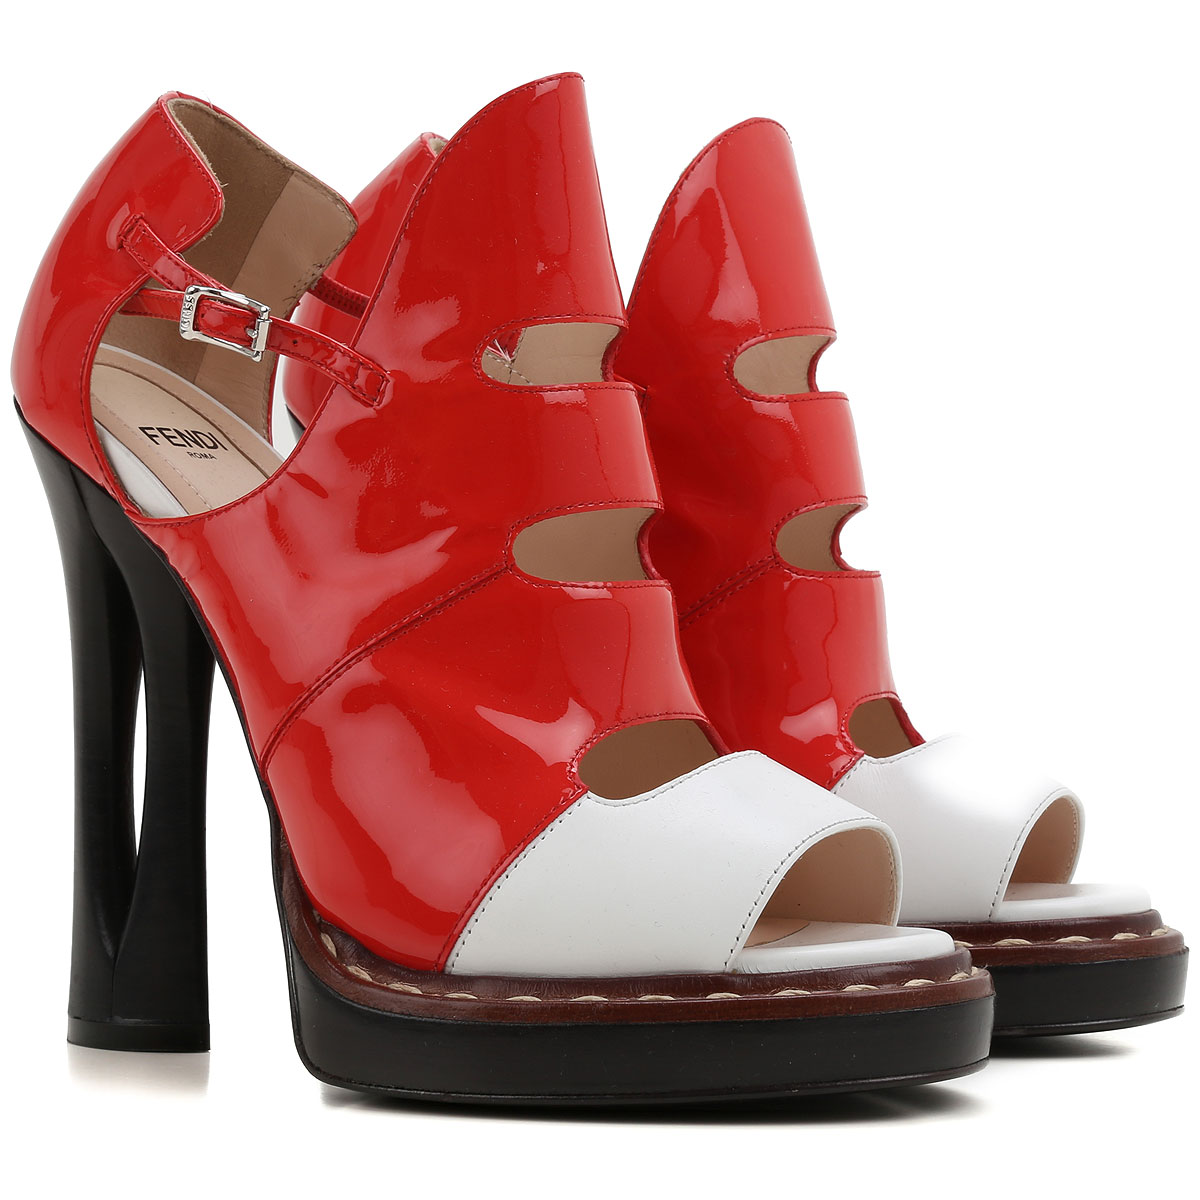 Chaussures Femme Fendi, Code produit: 8k5270-xe2-f01bn